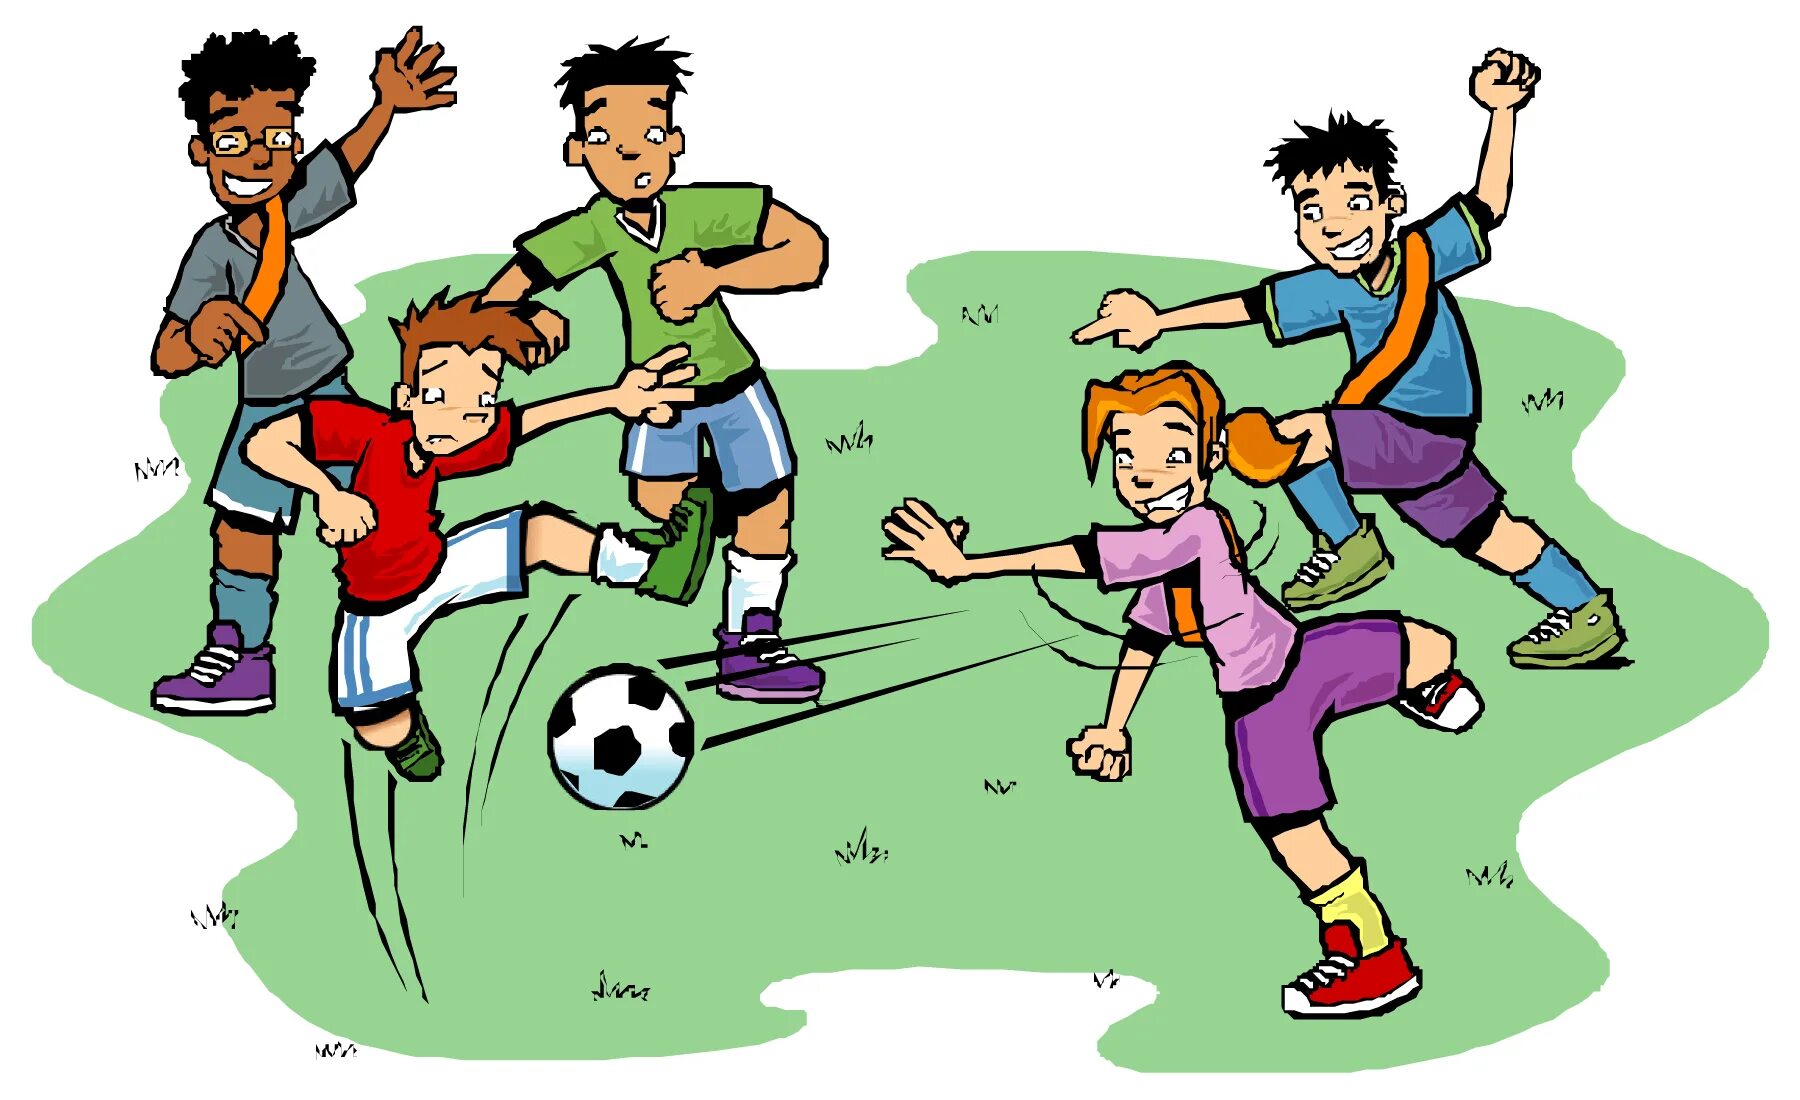 We interested in sport. Детский рисунок футбол. Футбол картинки для детей. Картинки про футбол для детей школьного возраста. Рисунок на тему футбол.